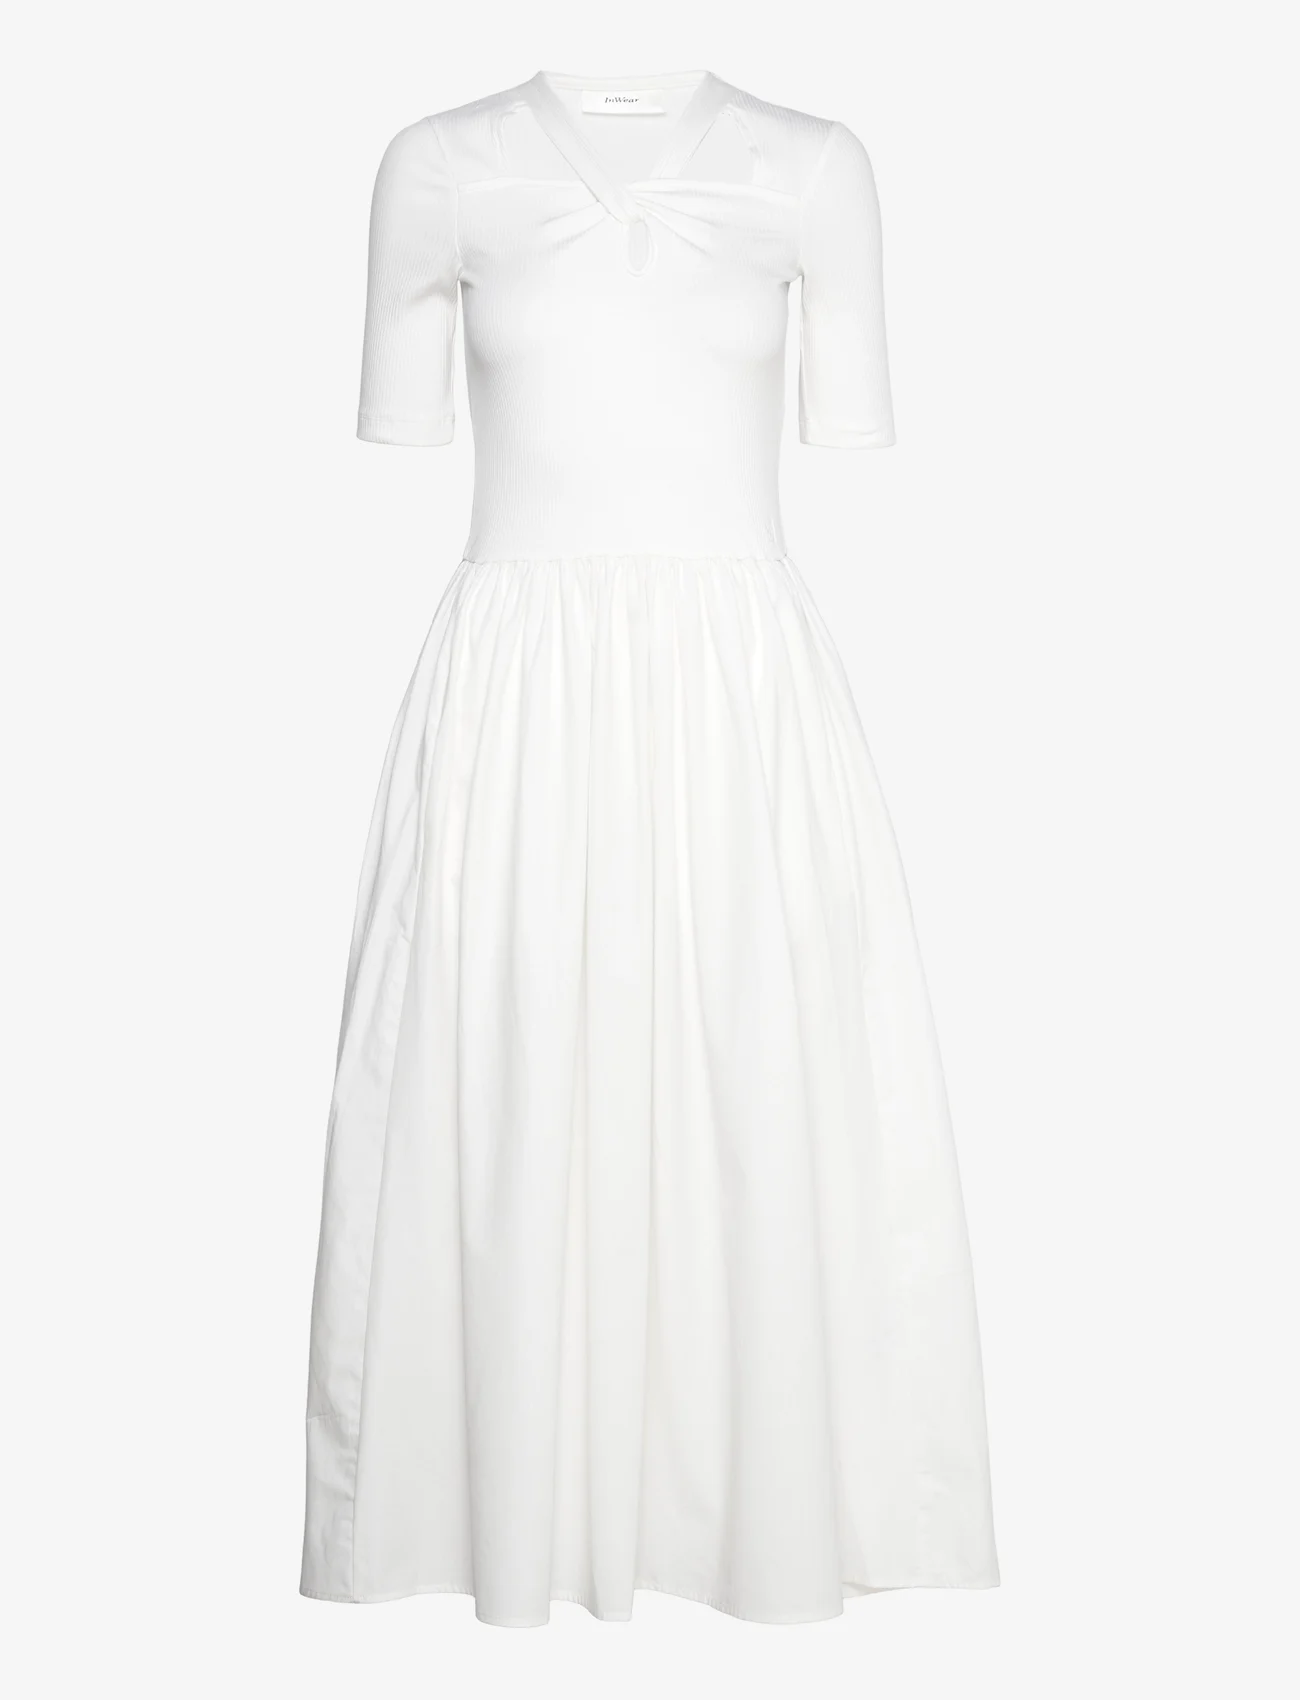 InWear - PukIW Dress - strickkleider - whisper white - 0